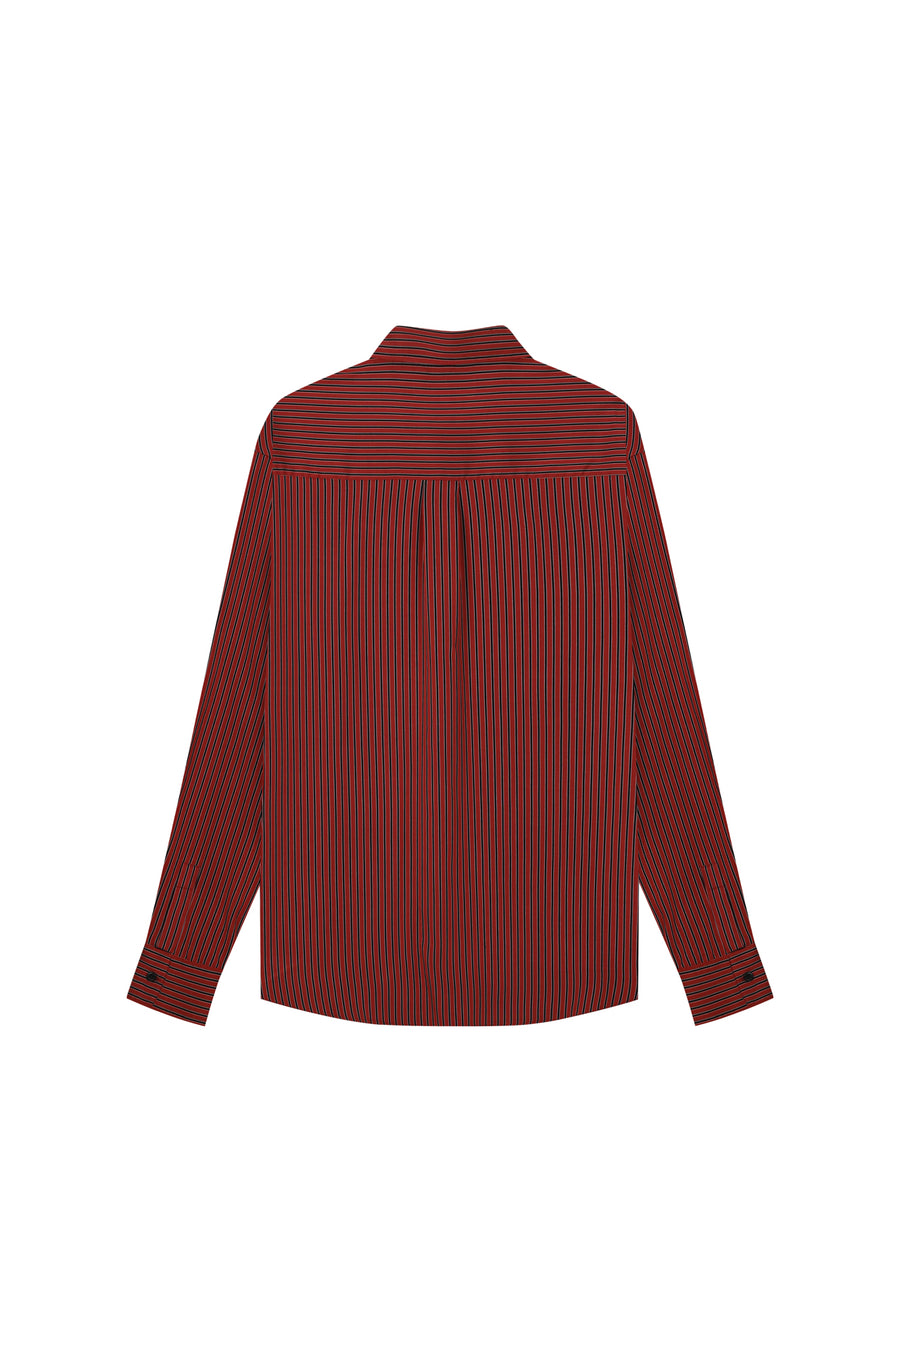 The Louis burgundy striped shirt